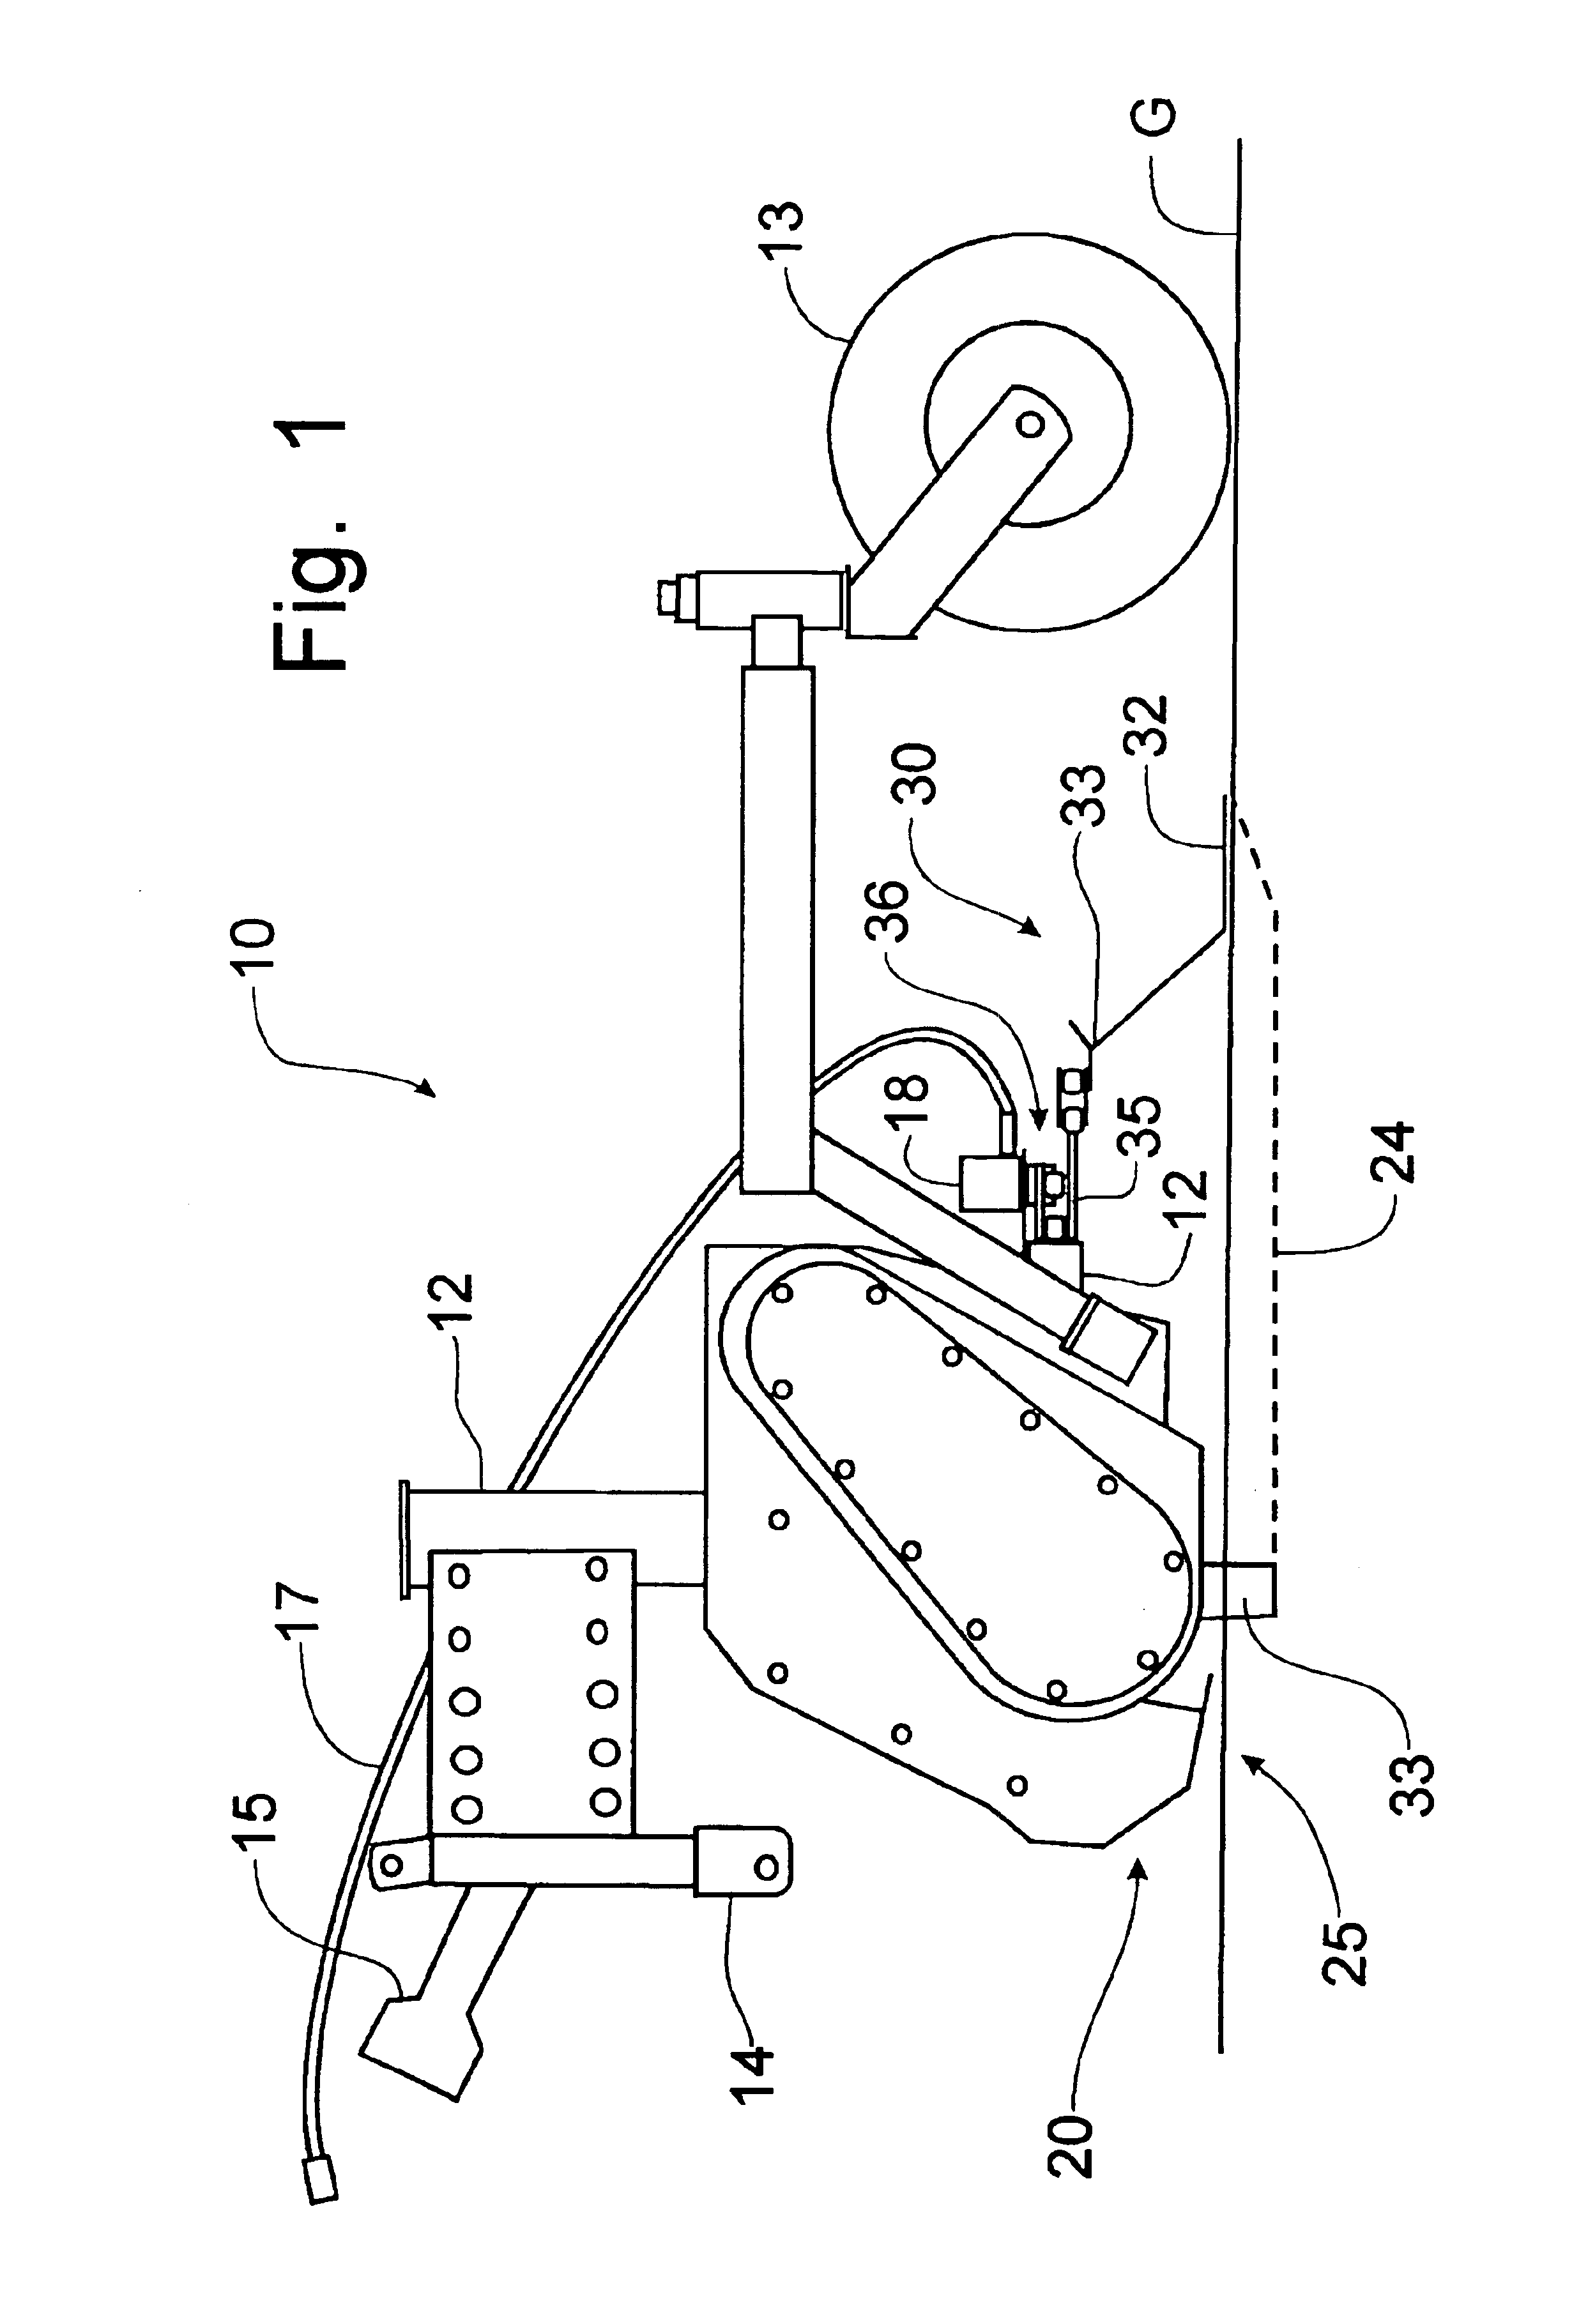 Linear turf aeration apparatus